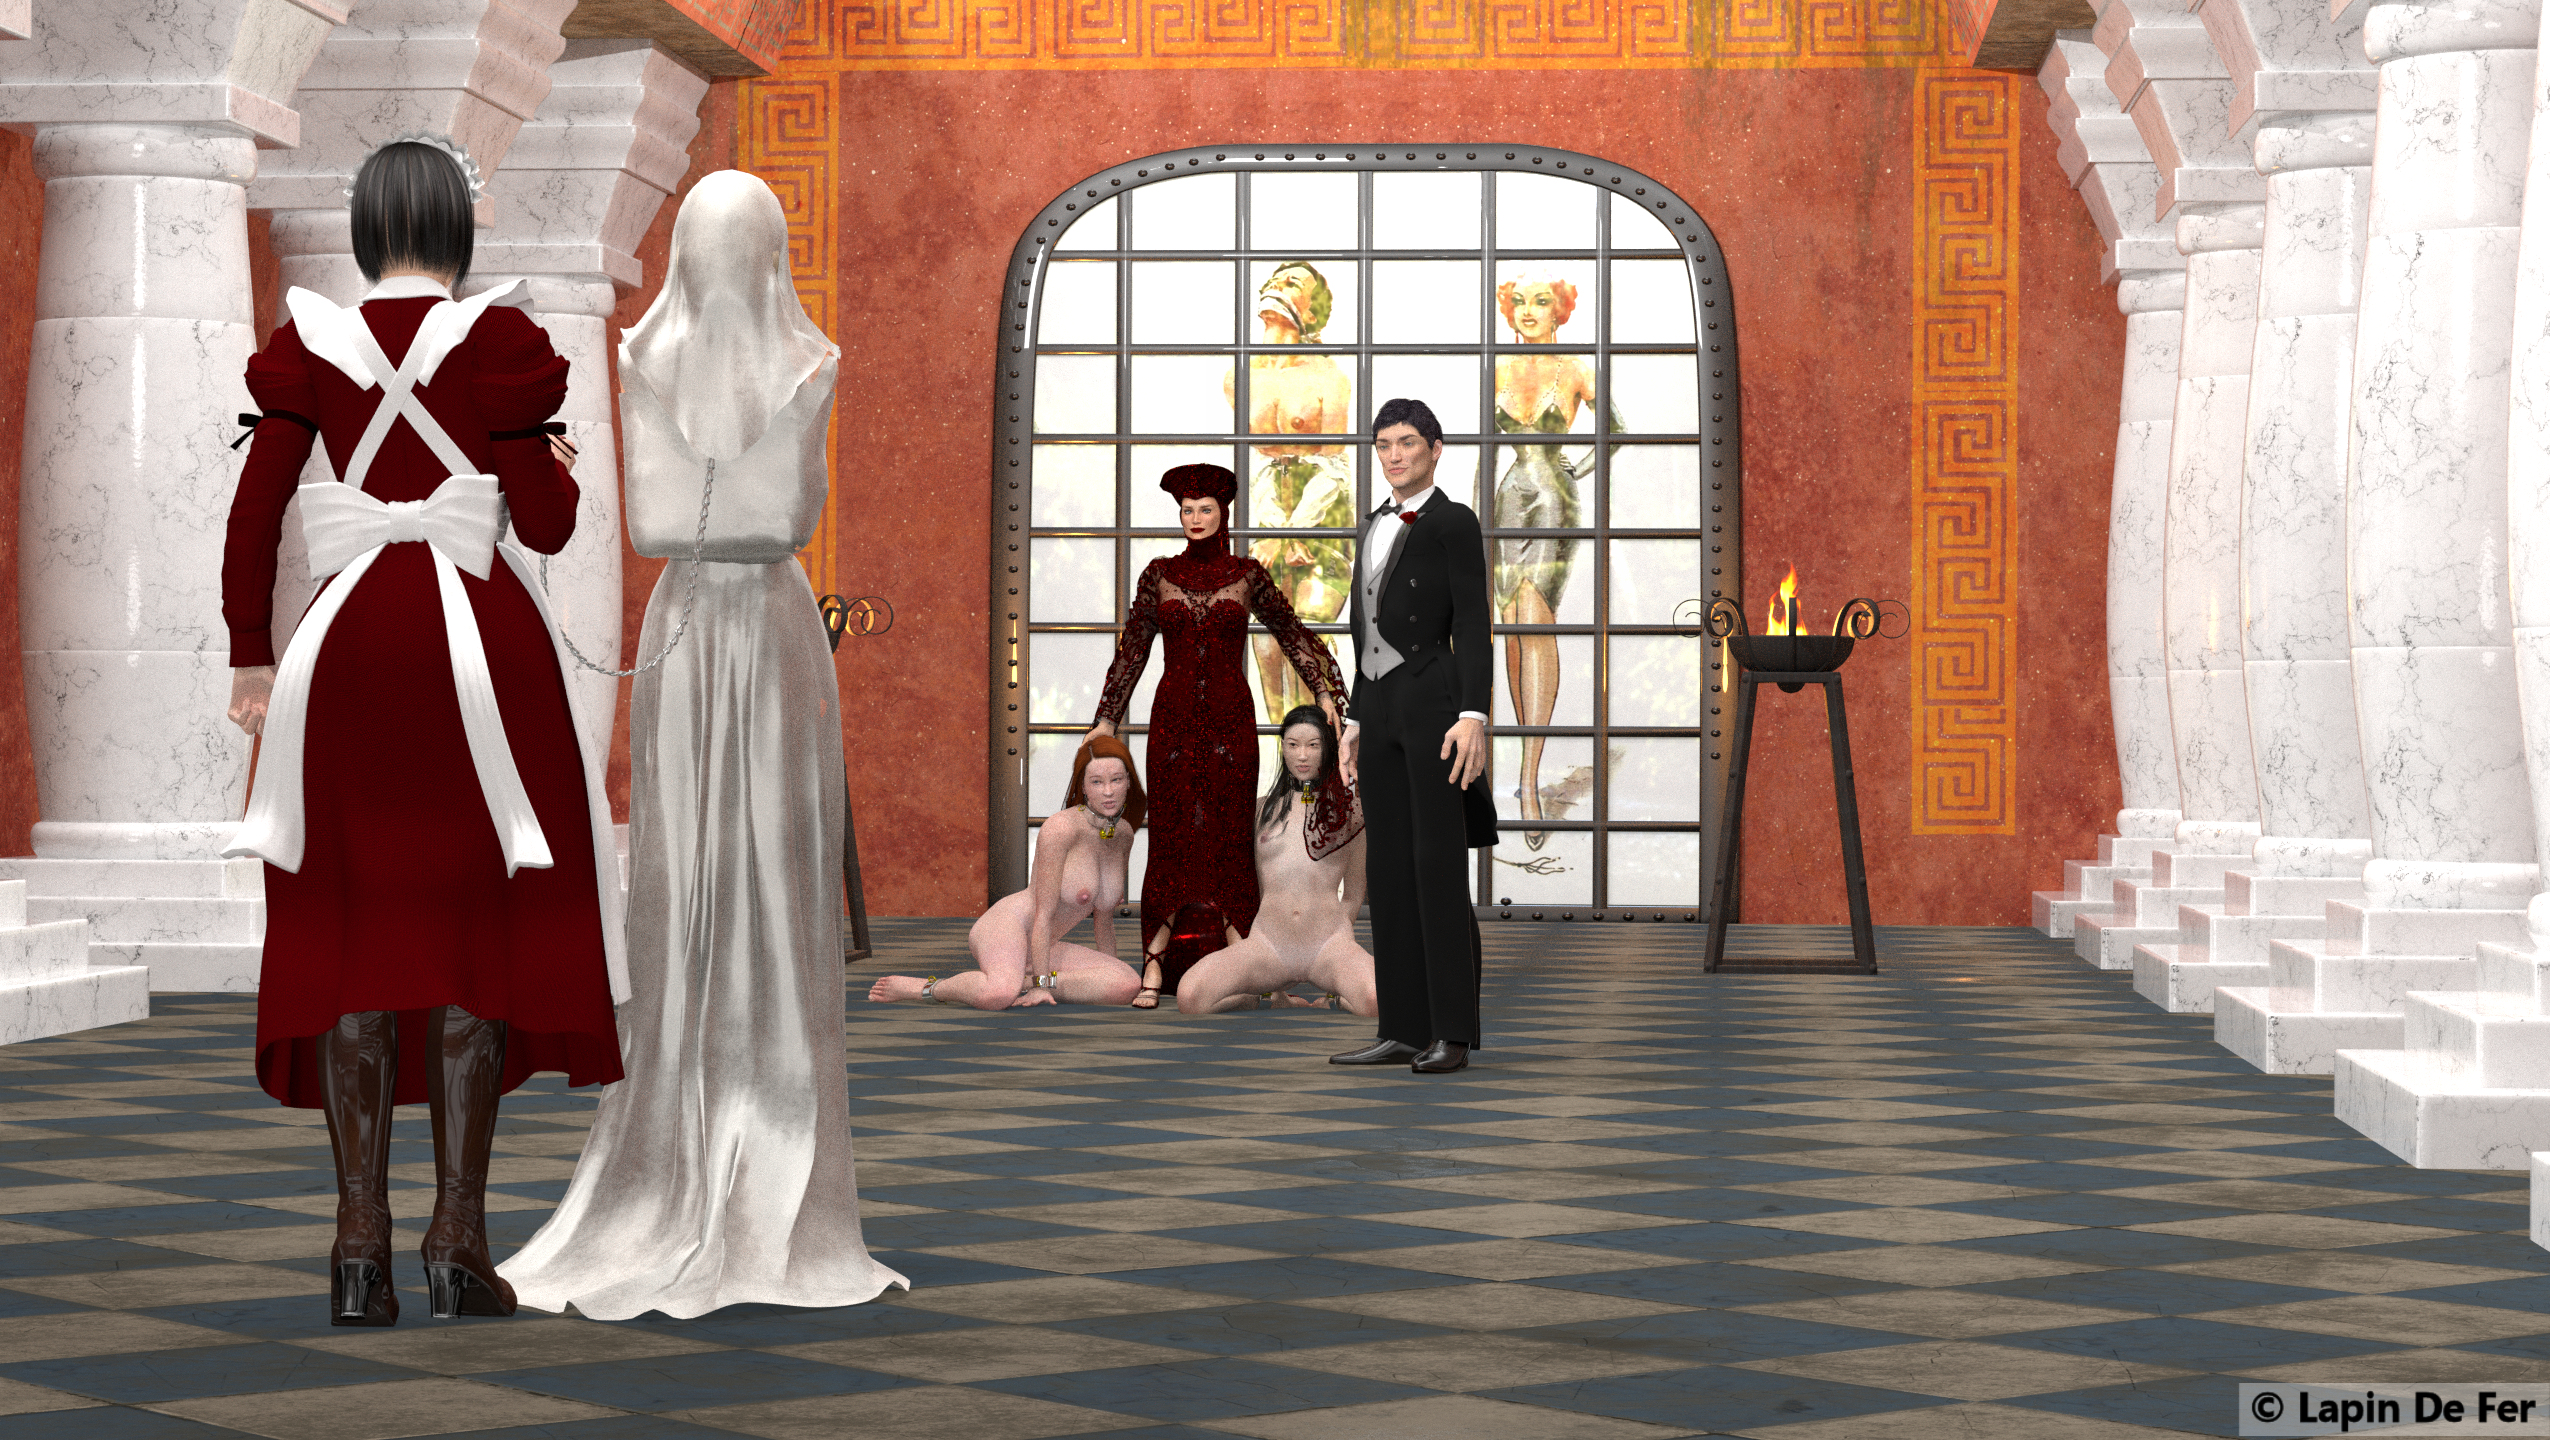 Venus Corset Wedding Hall 2 - The Groom is waiting